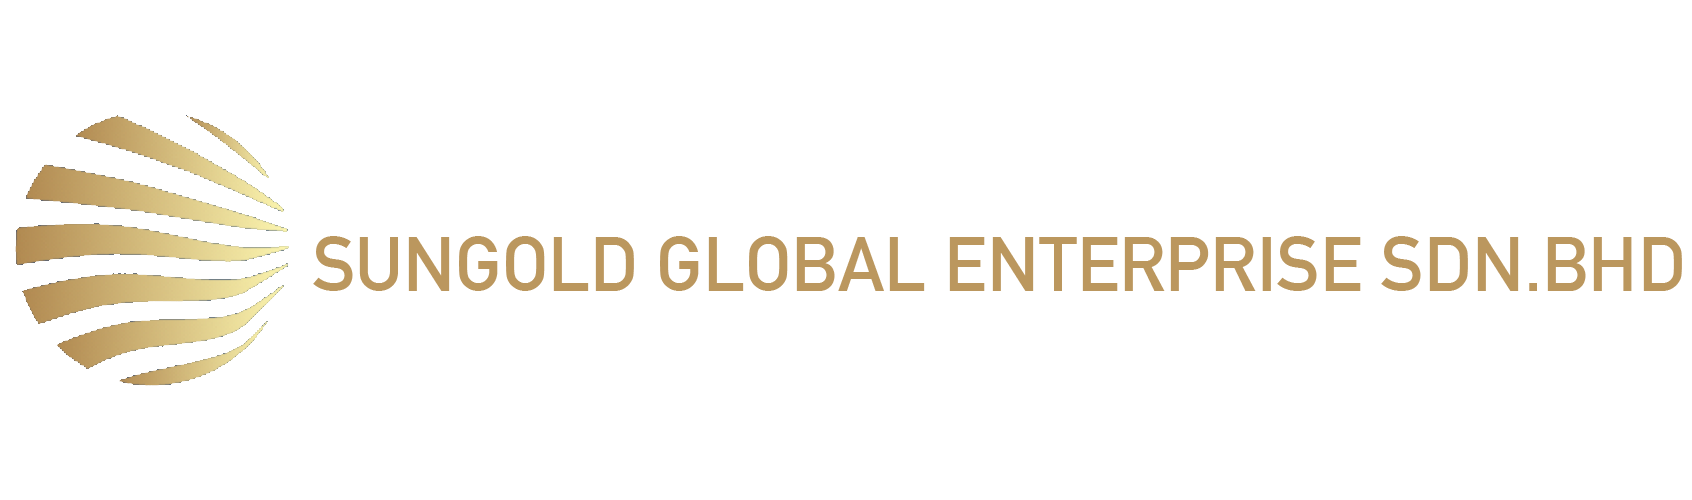 Sungold Global Enterprise Sdn. Bhd.